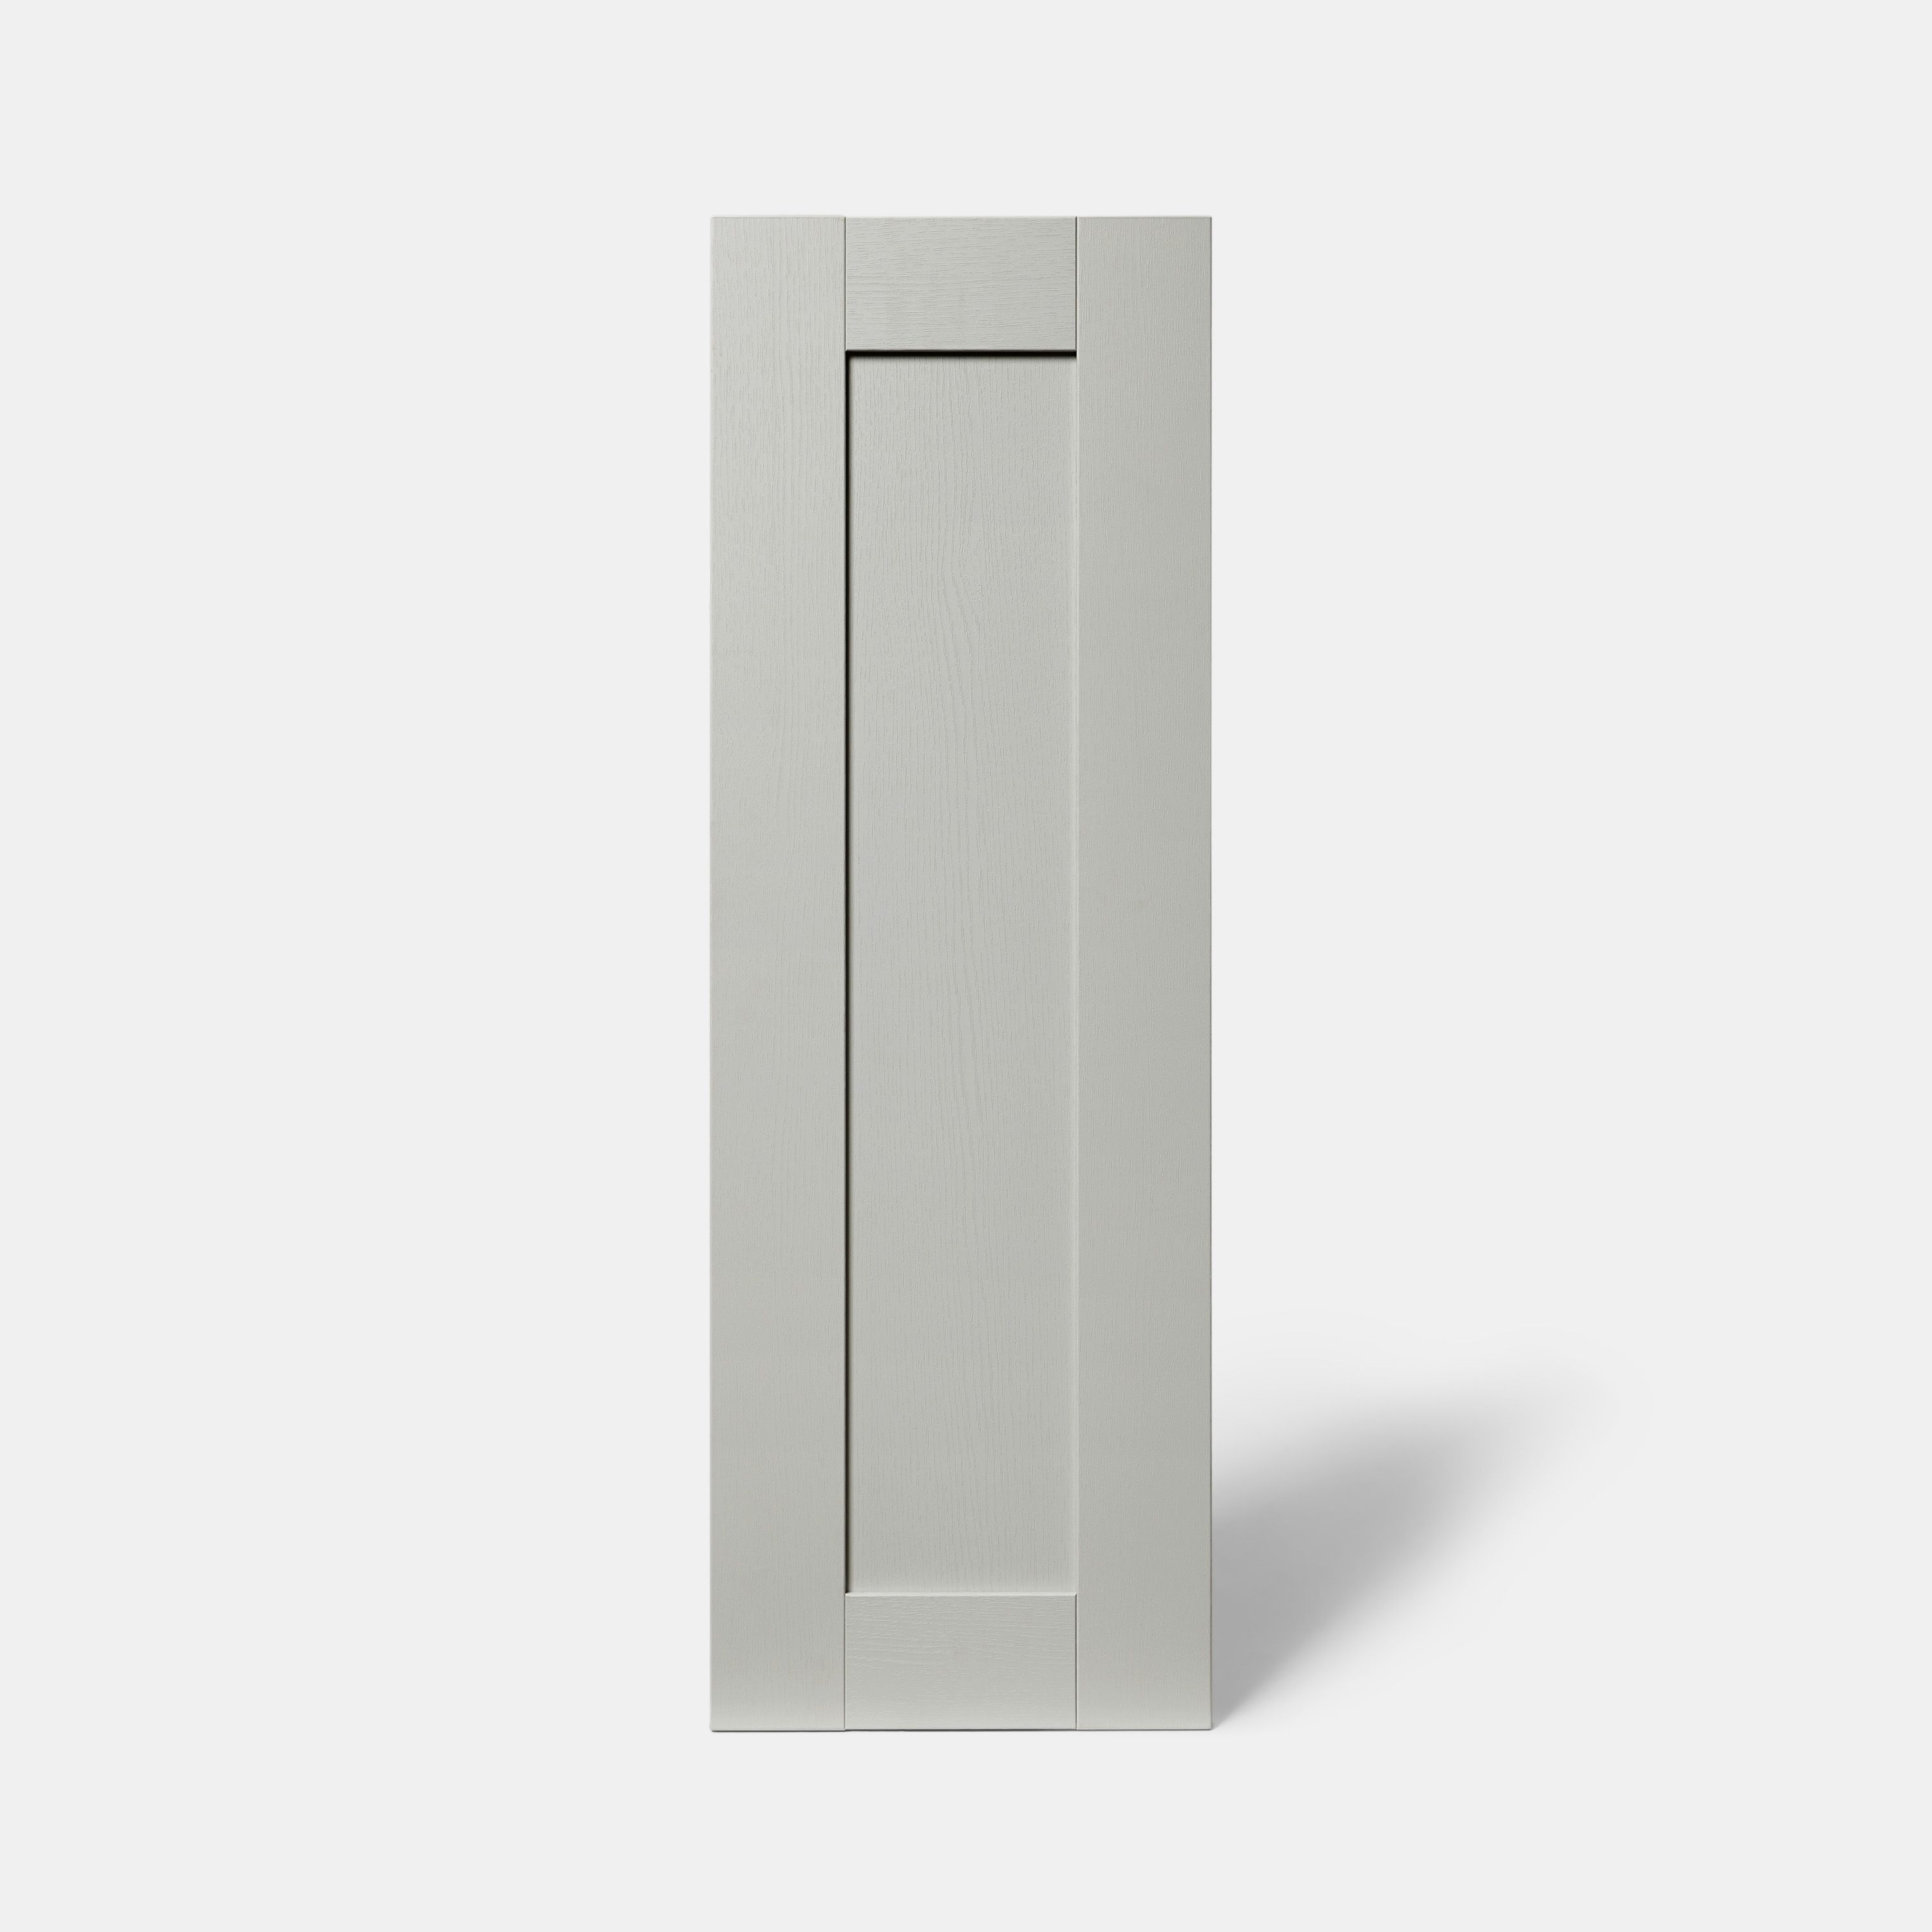 GoodHome Alpinia Matt grey painted wood effect shaker Tall wall Cabinet door (W)300mm (H)895mm (T)18mm